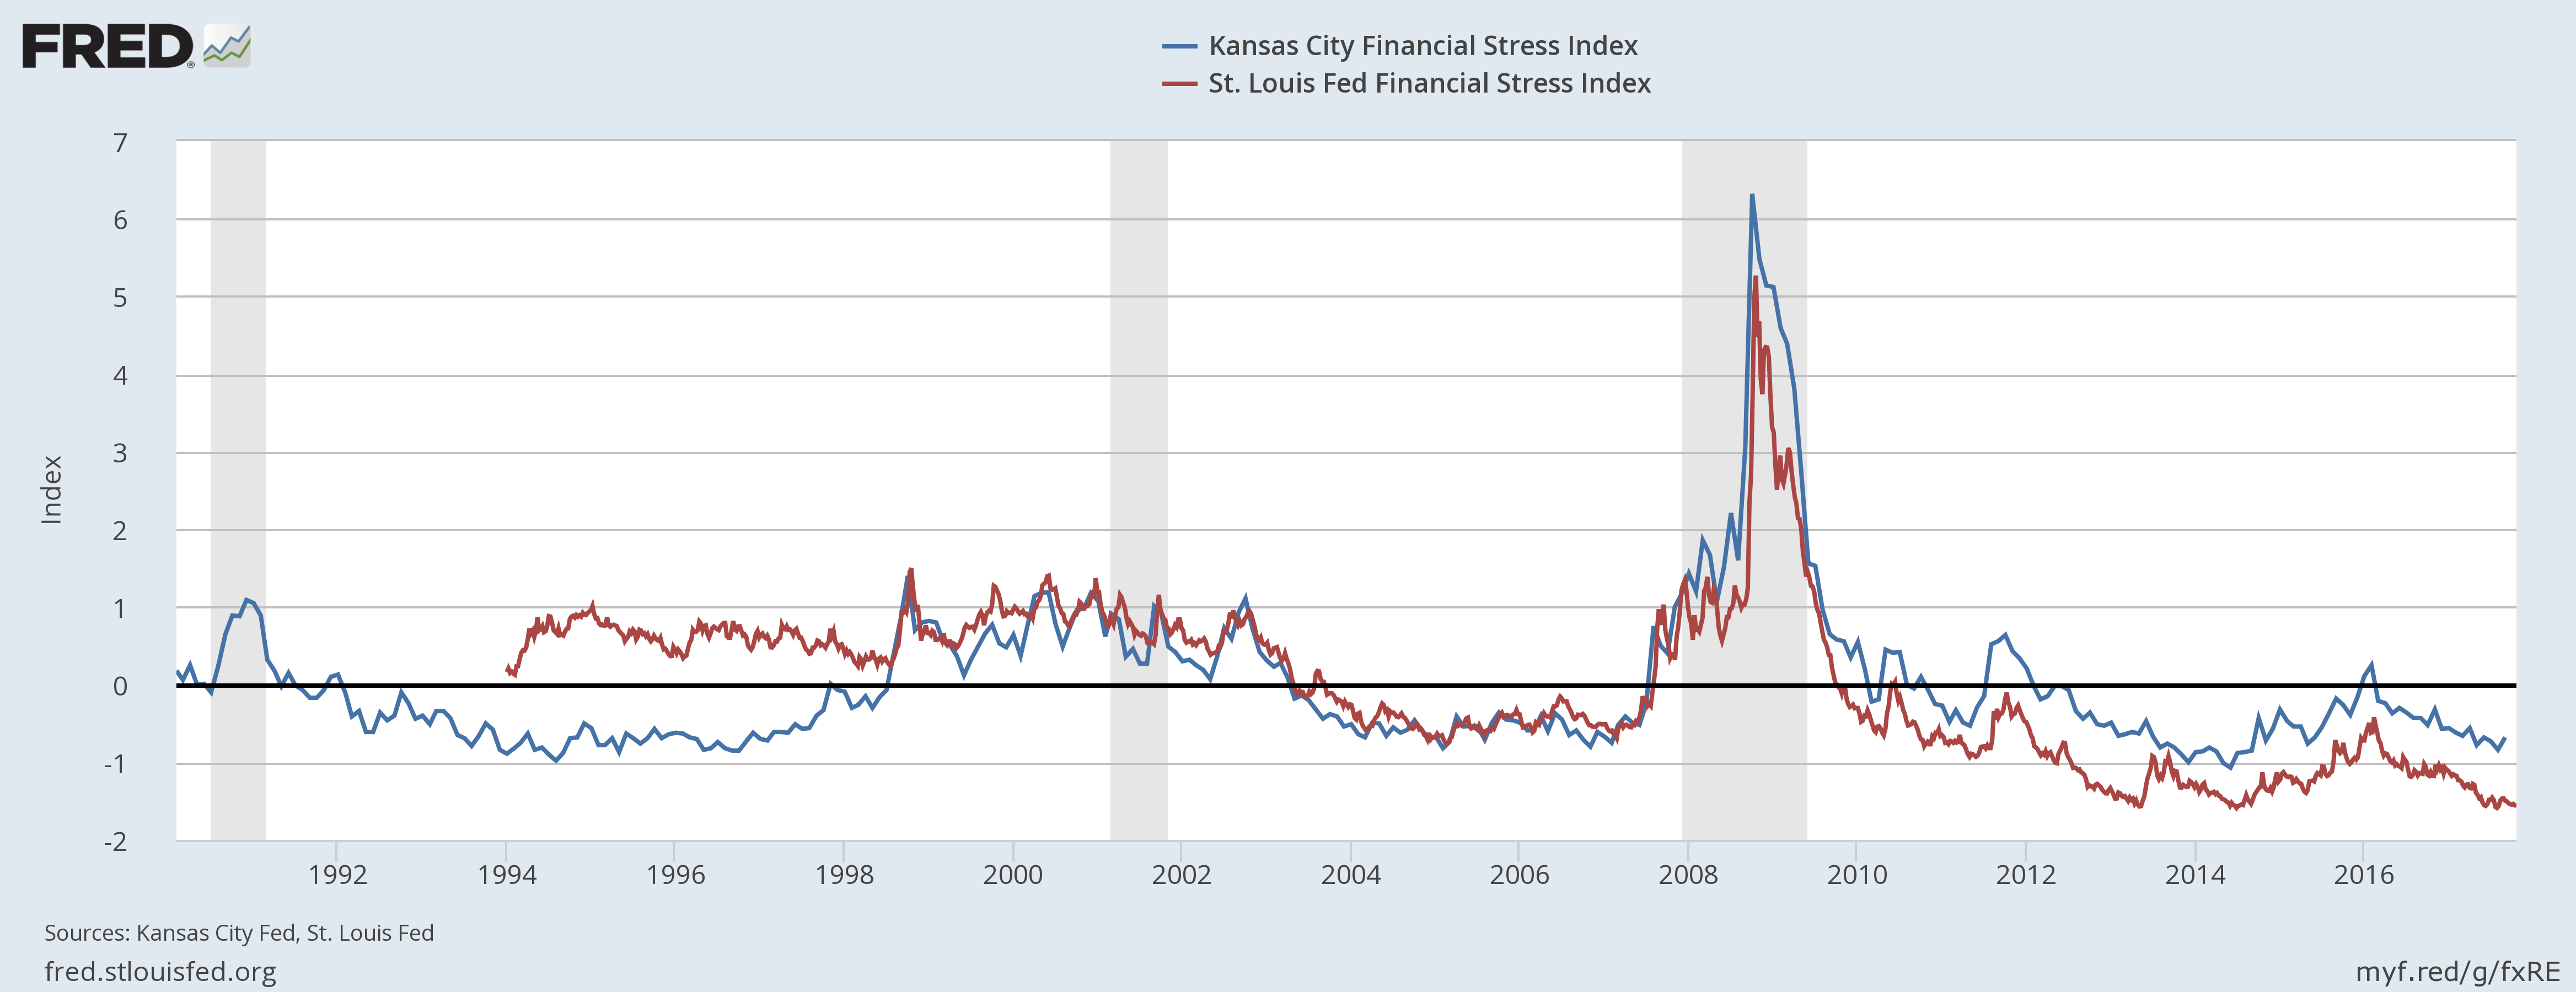 Kansas City Financial Stress Index